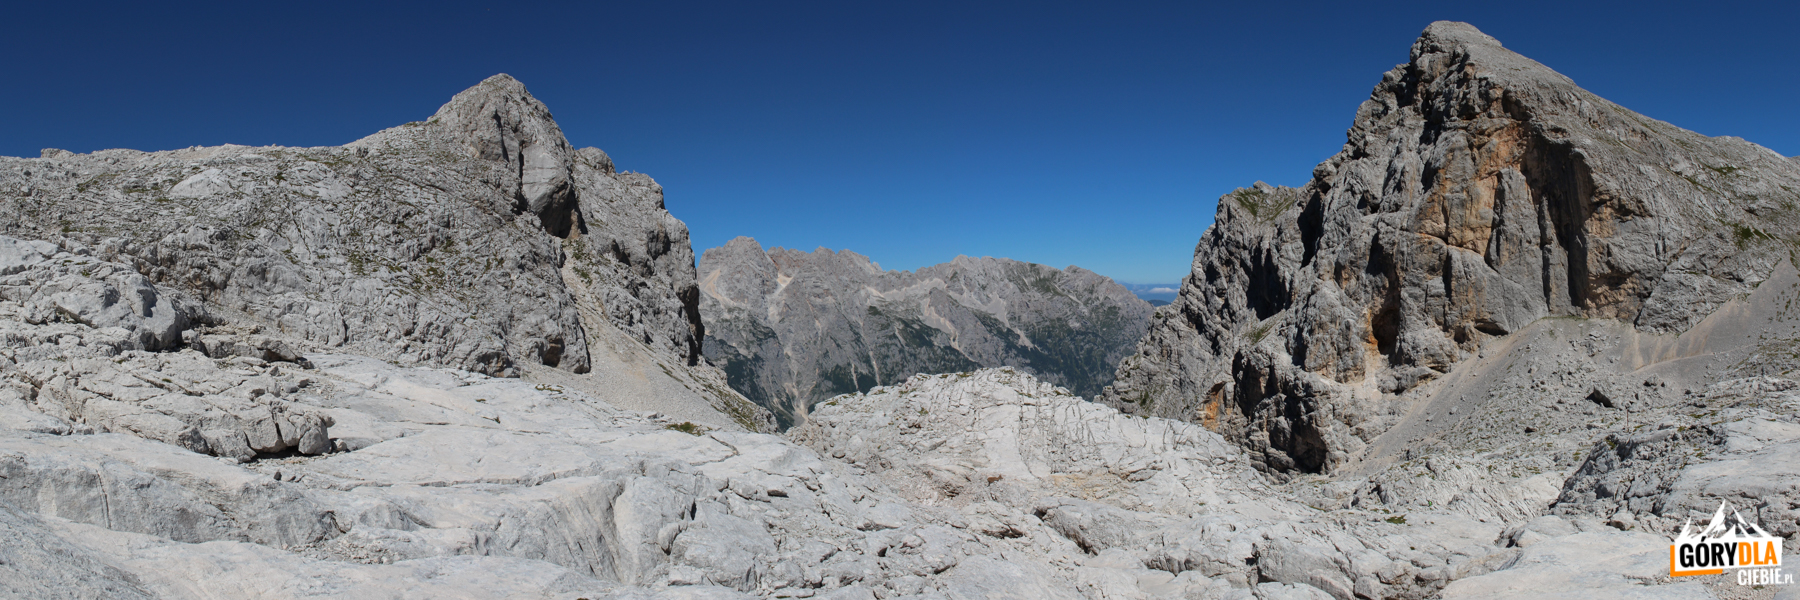 Widok ze środka kotła na Begunjski vrh (2461 m)